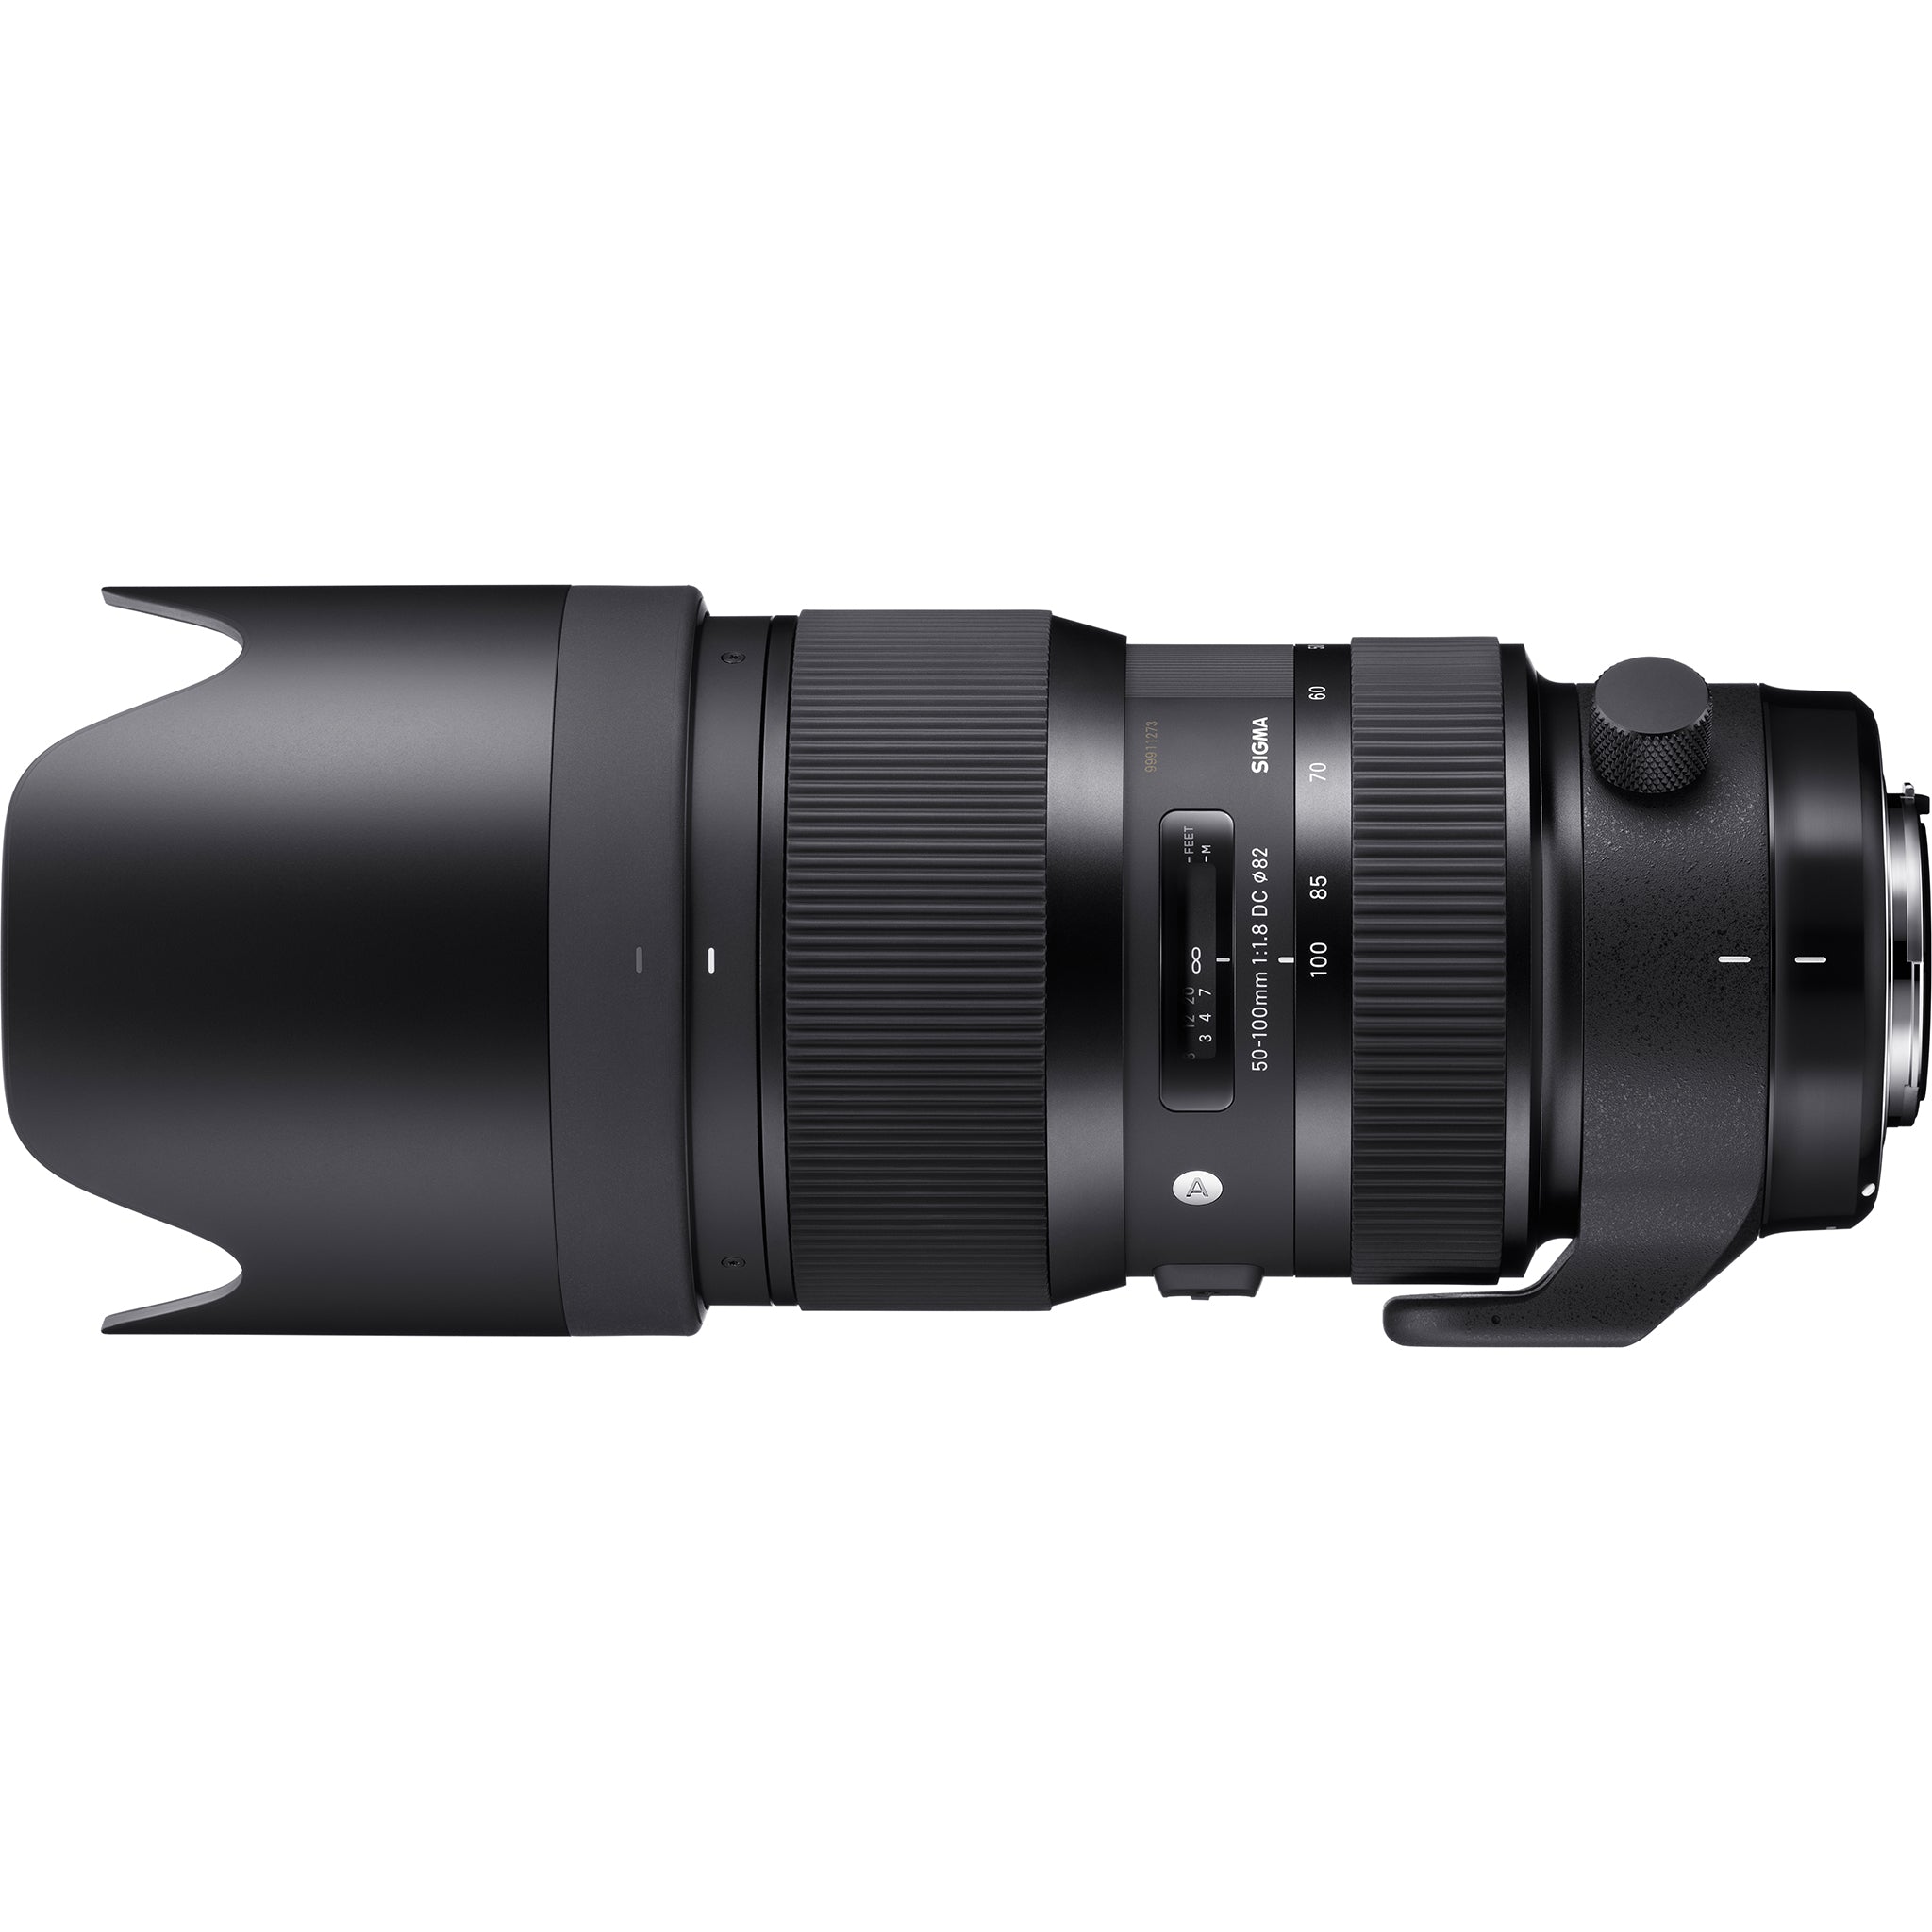 Sigma 50-100mm F1.8 DC HSM Art Lens